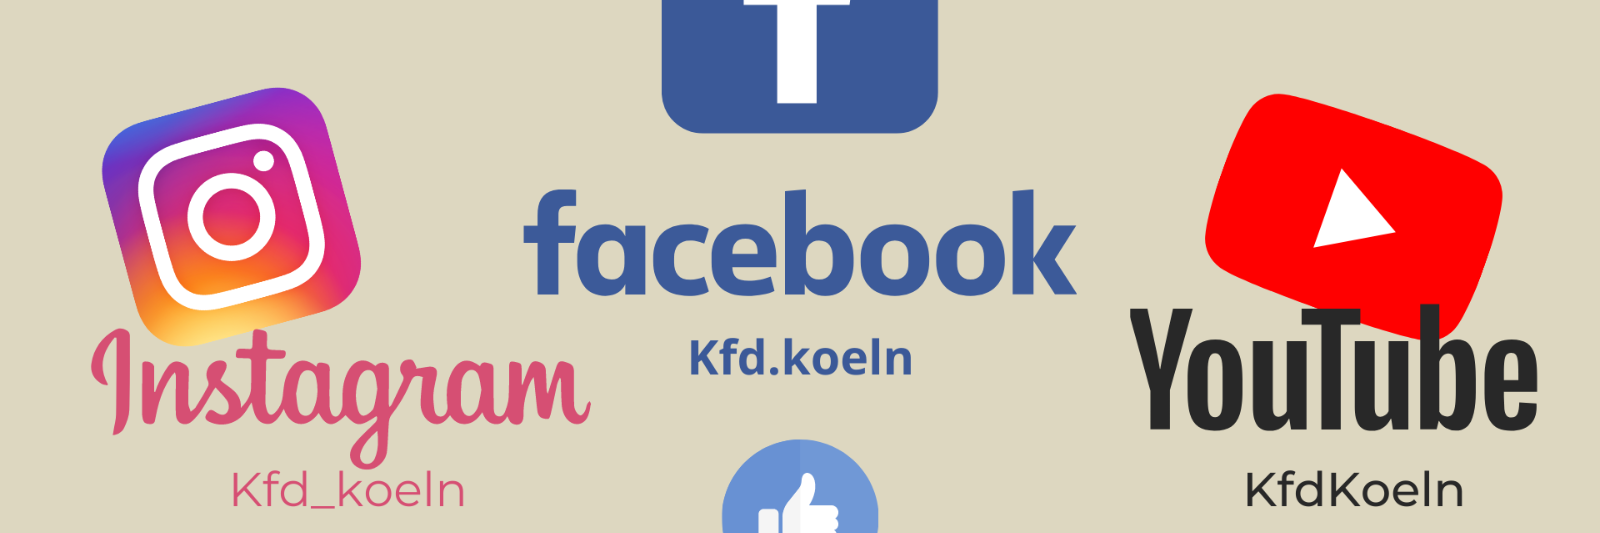 Kfd_koeln.SocialMedia